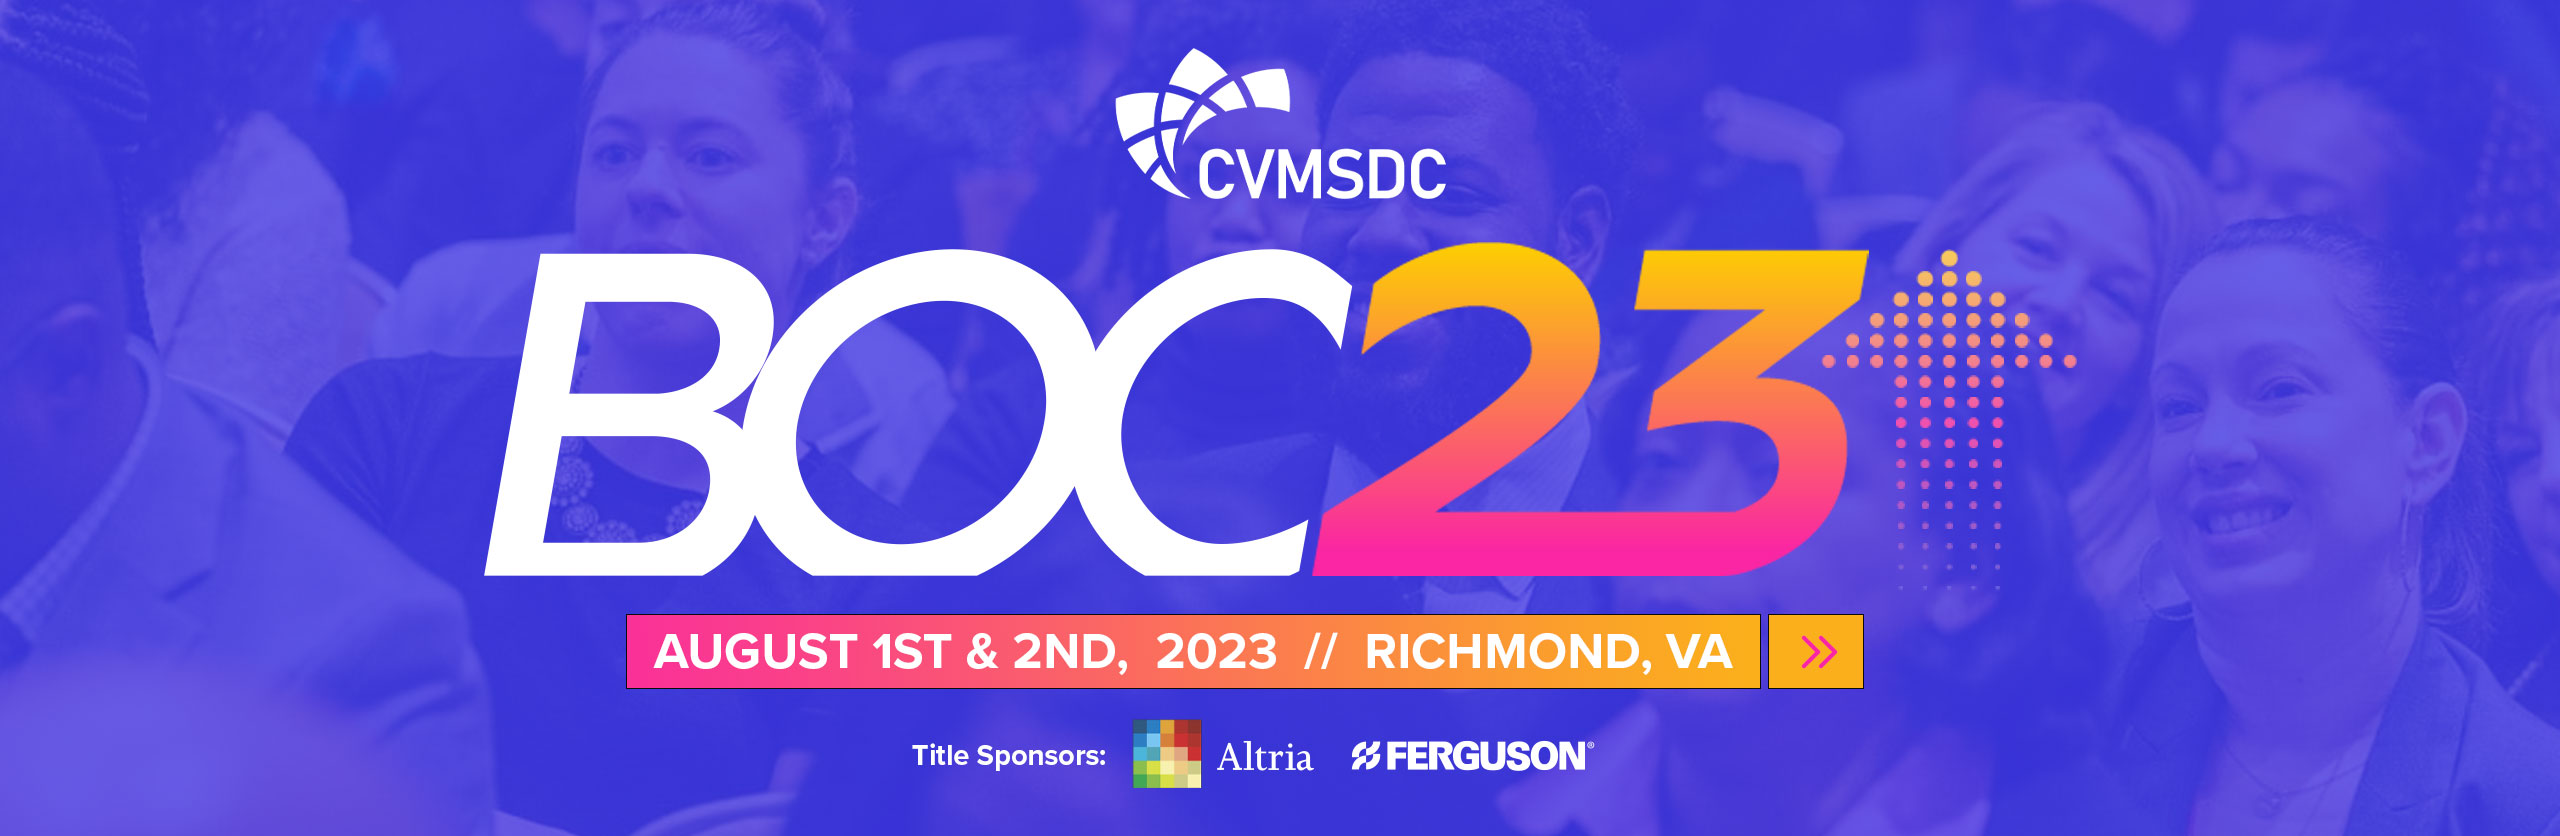 Register for CVMSDC's BOC23!